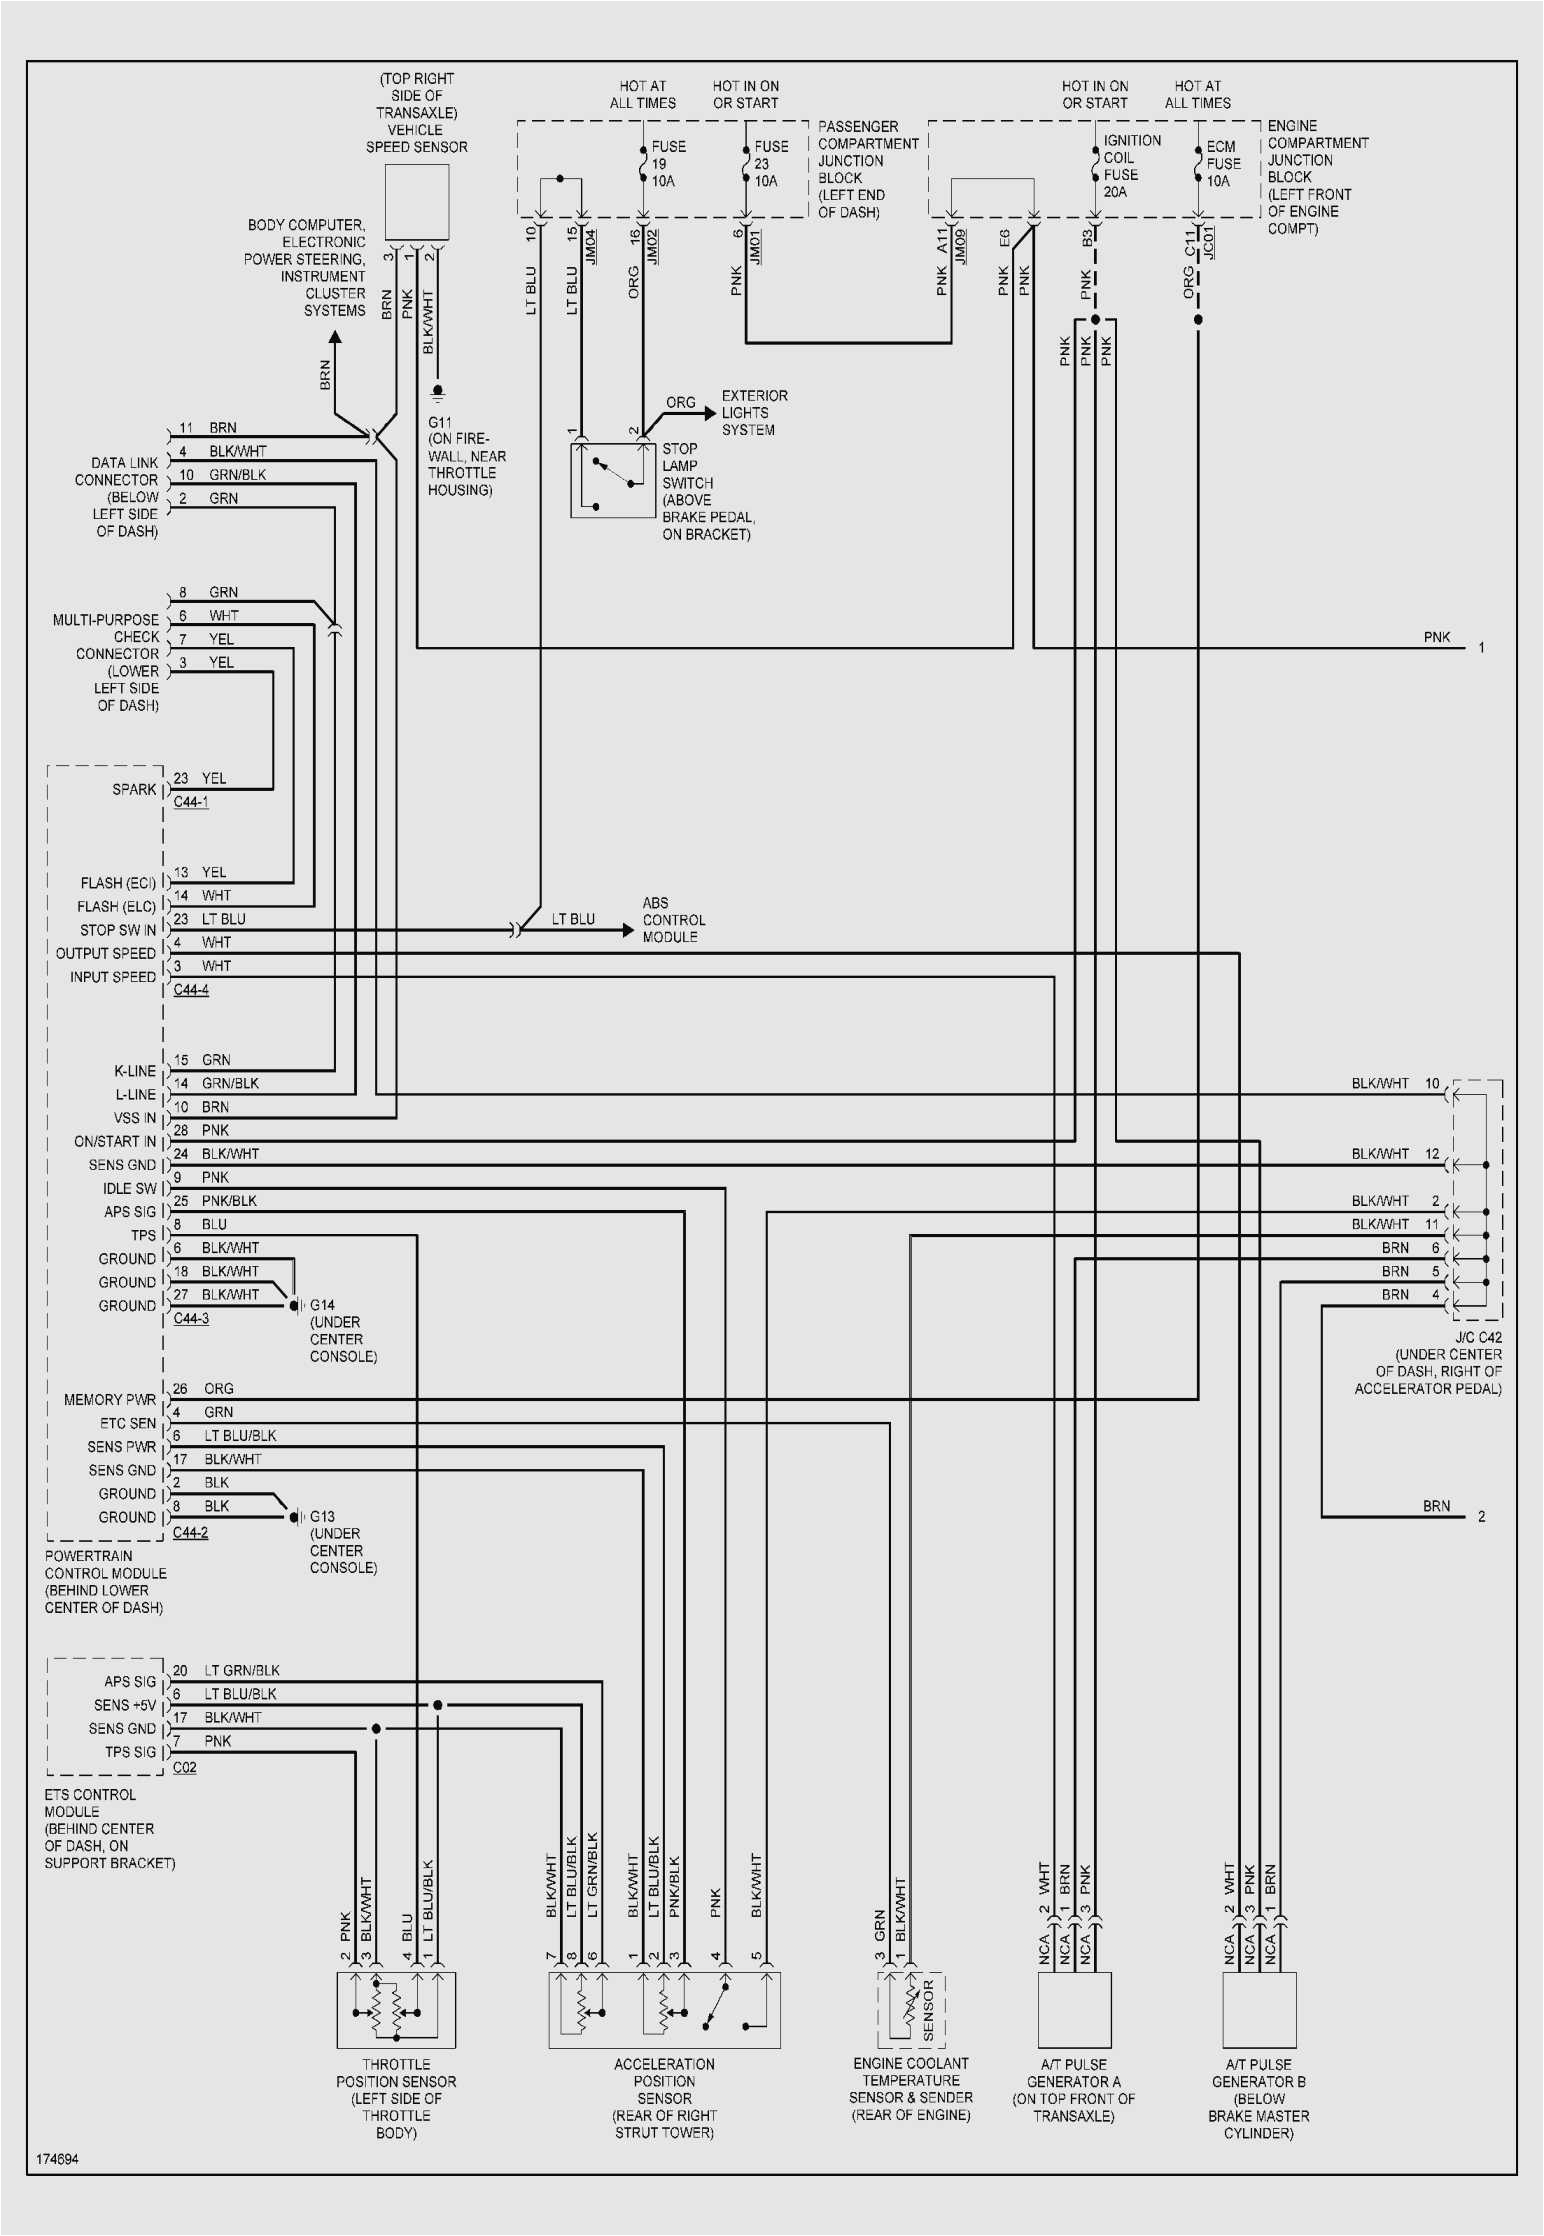 wiring diagram for workshop free download schematic schematic wiring diagram for schematic free download wiring diagram